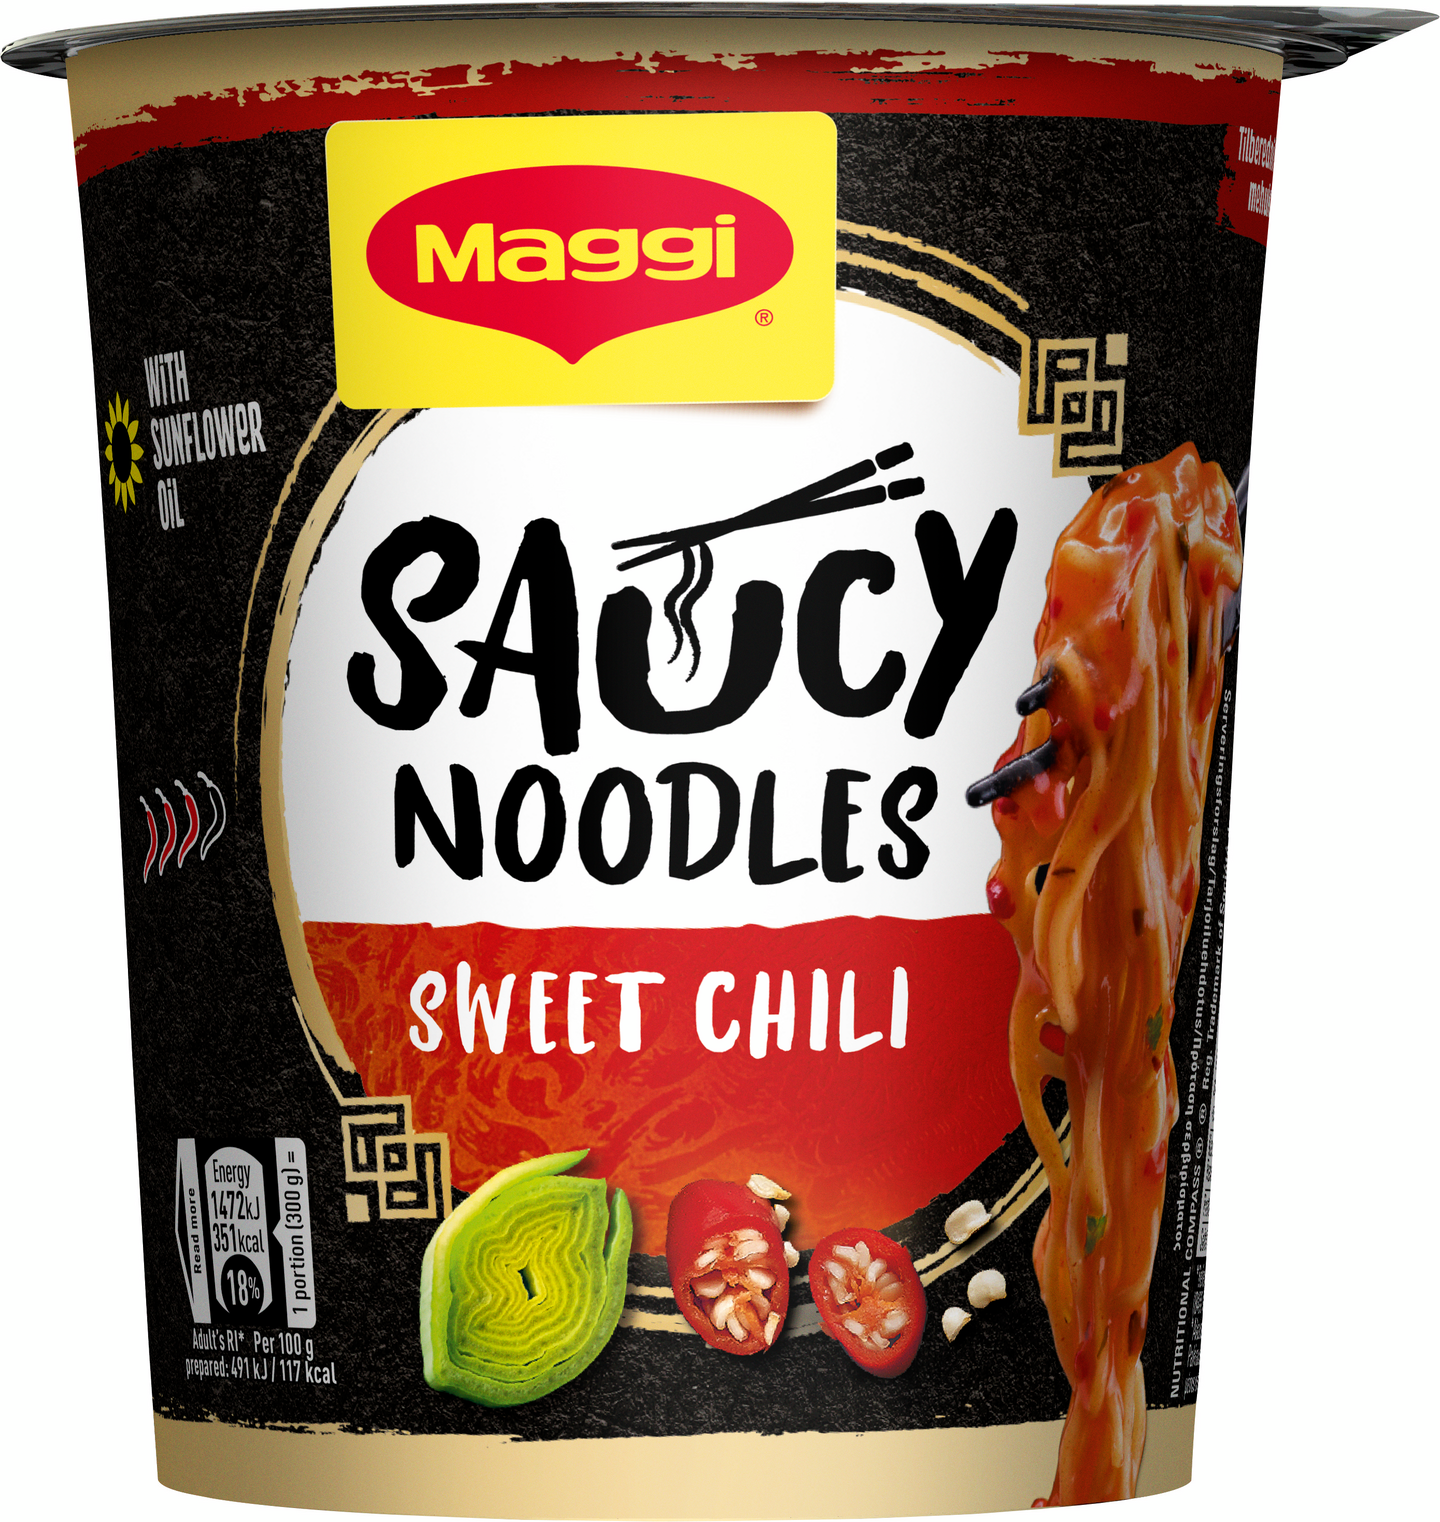 Maggi Saucy Noodles 75g Sweet Chili nuudeliateria